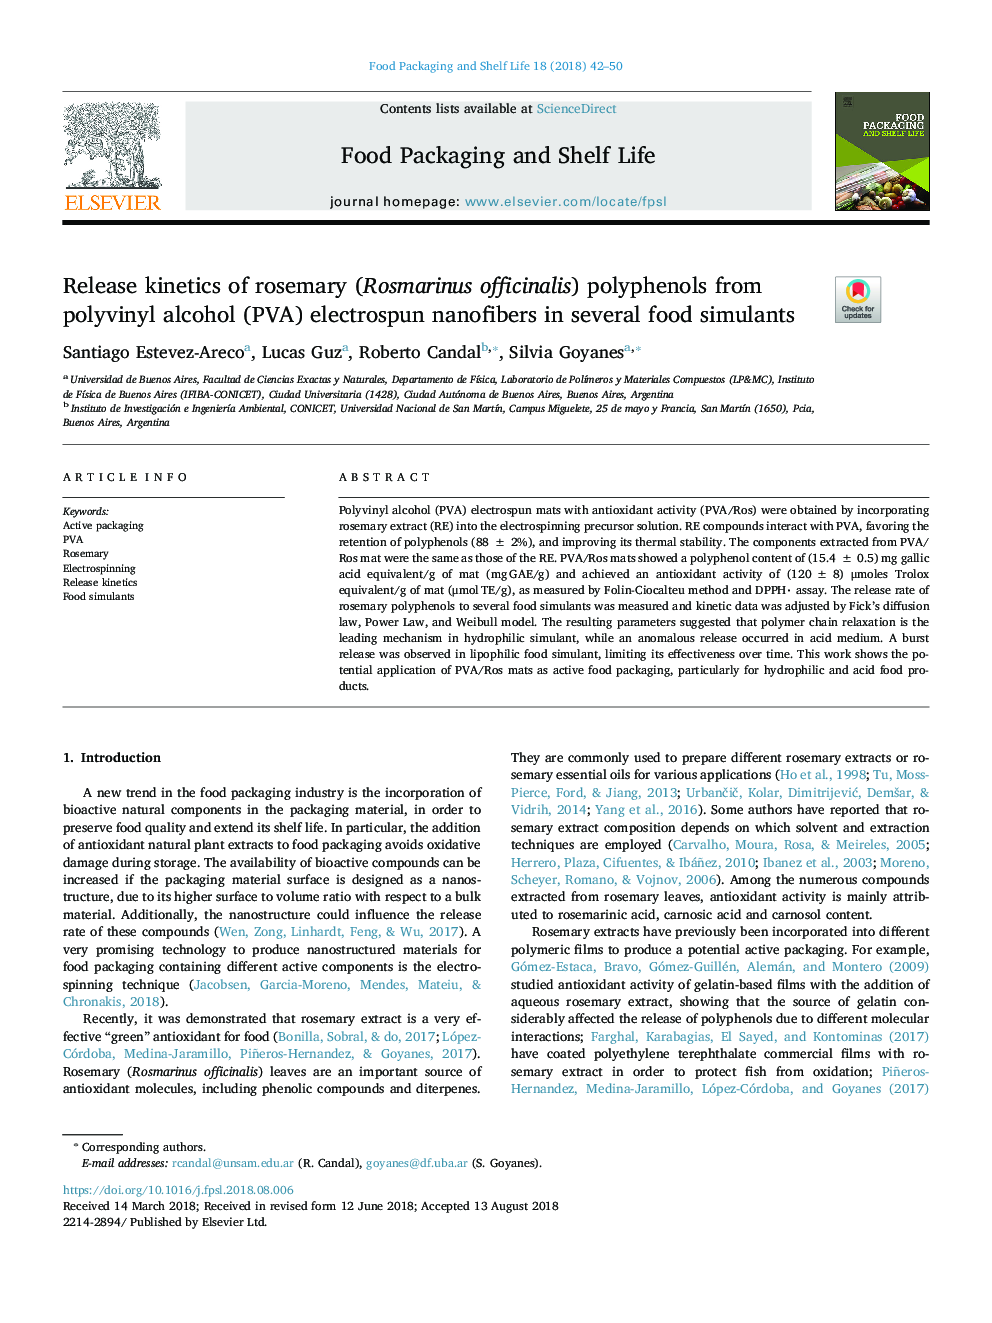 Release kinetics of rosemary (Rosmarinus officinalis) polyphenols from polyvinyl alcohol (PVA) electrospun nanofibers in several food simulants